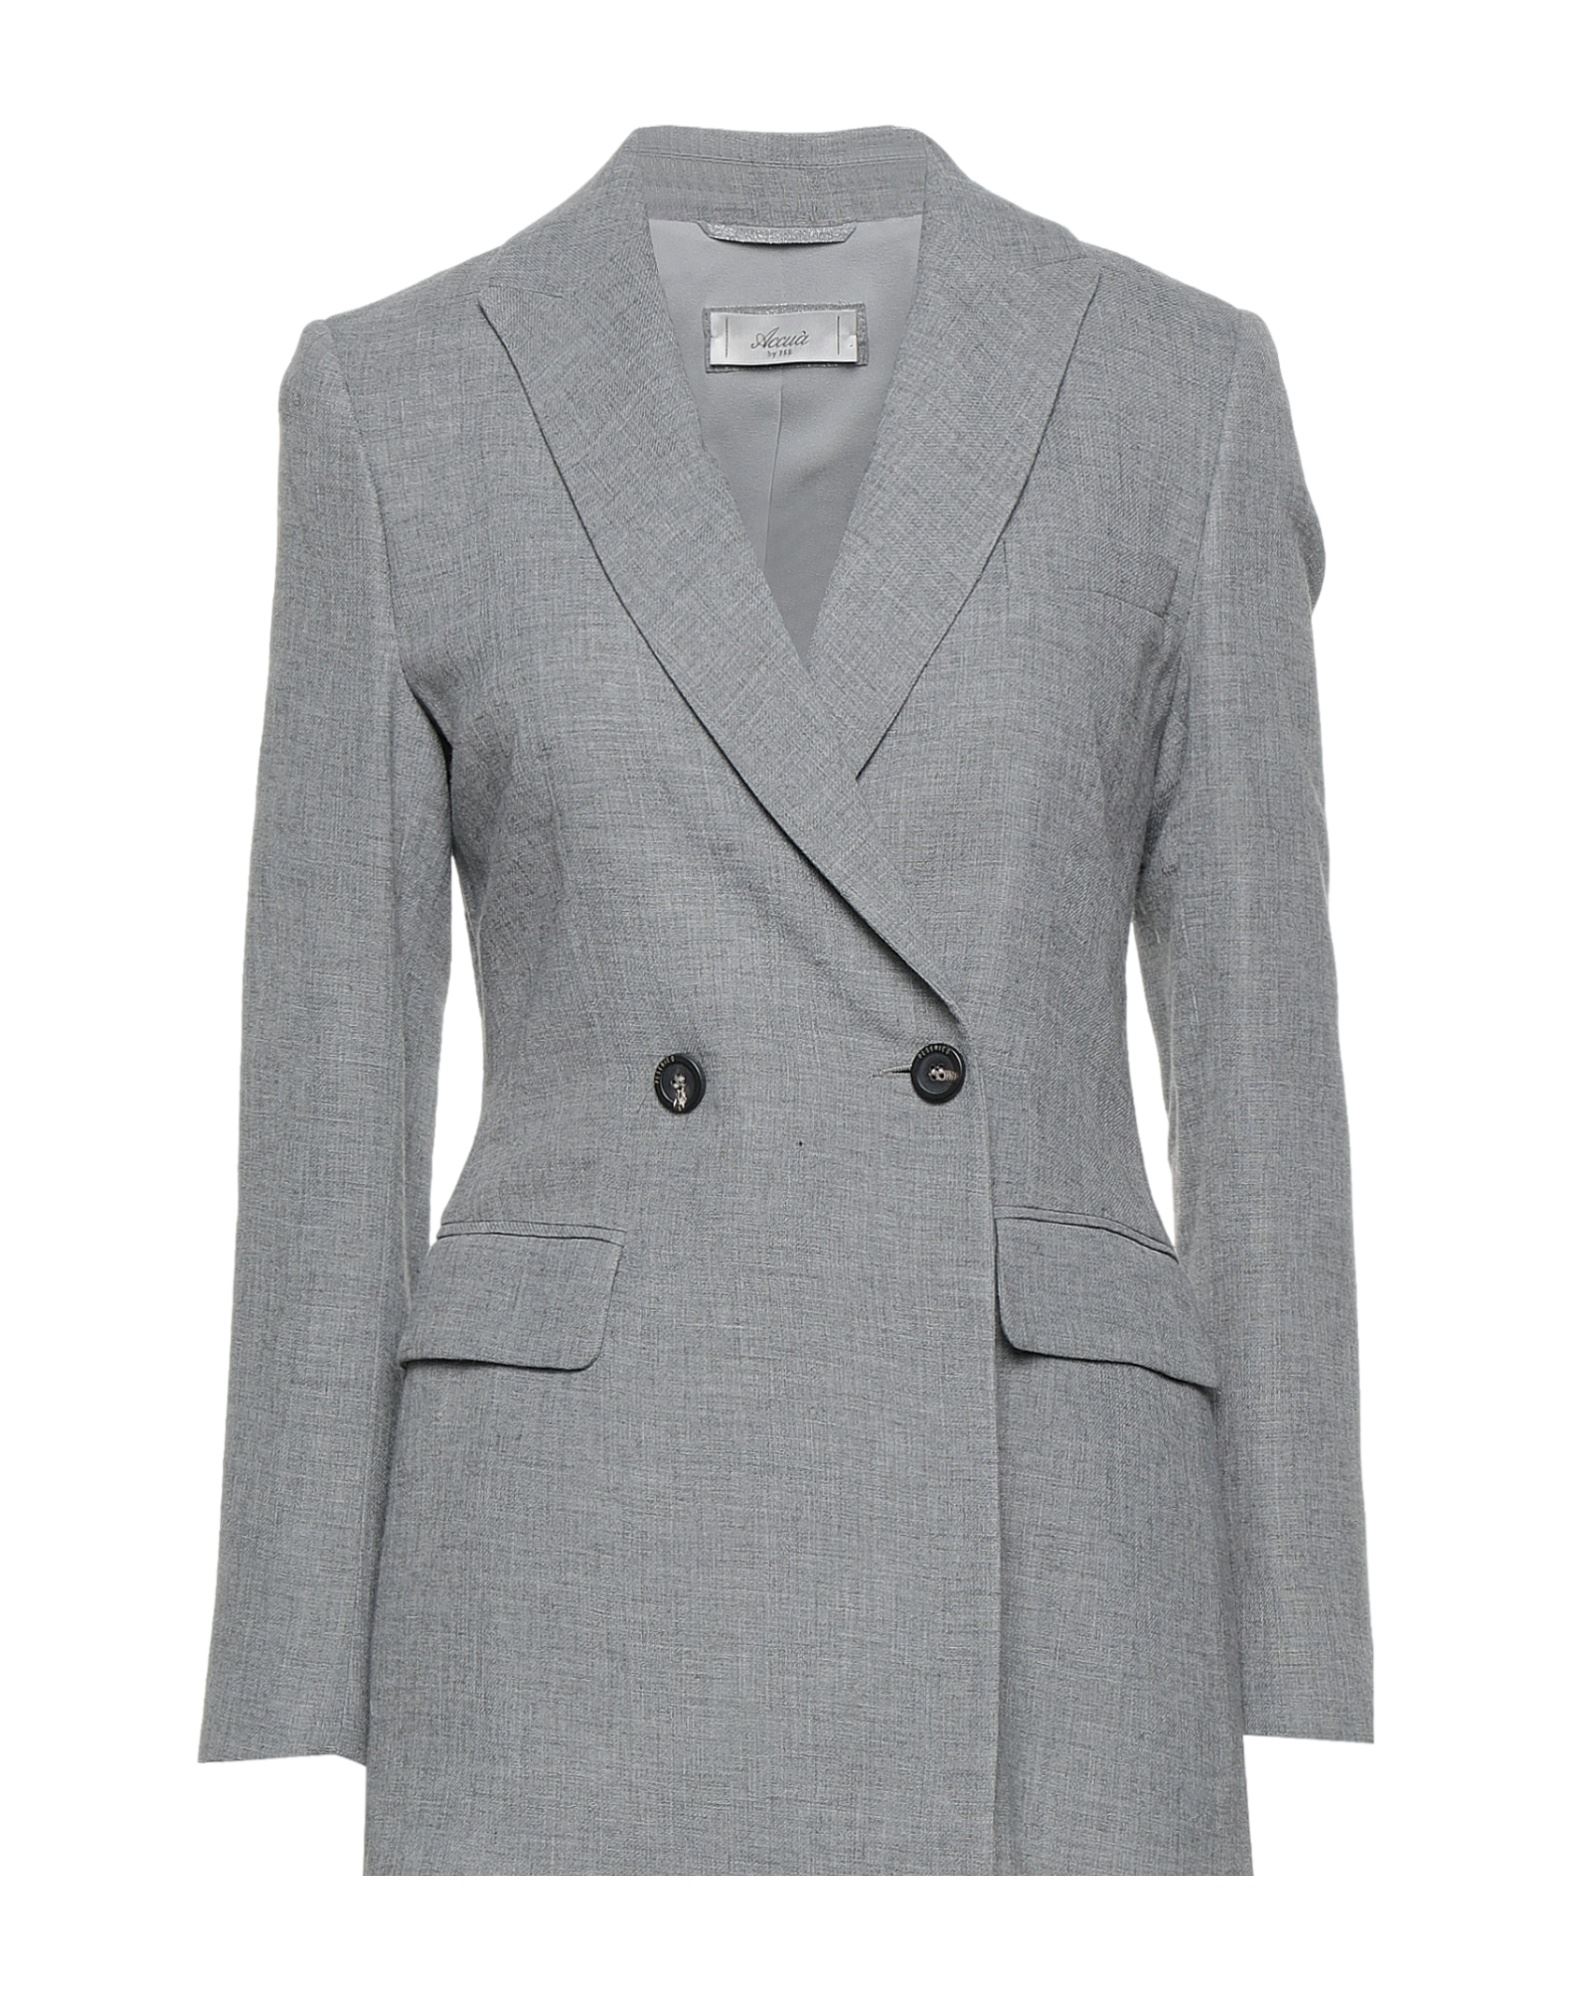 Accuà By Psr Woman Suit Jacket Grey Size 2 Viscose, Virgin Wool